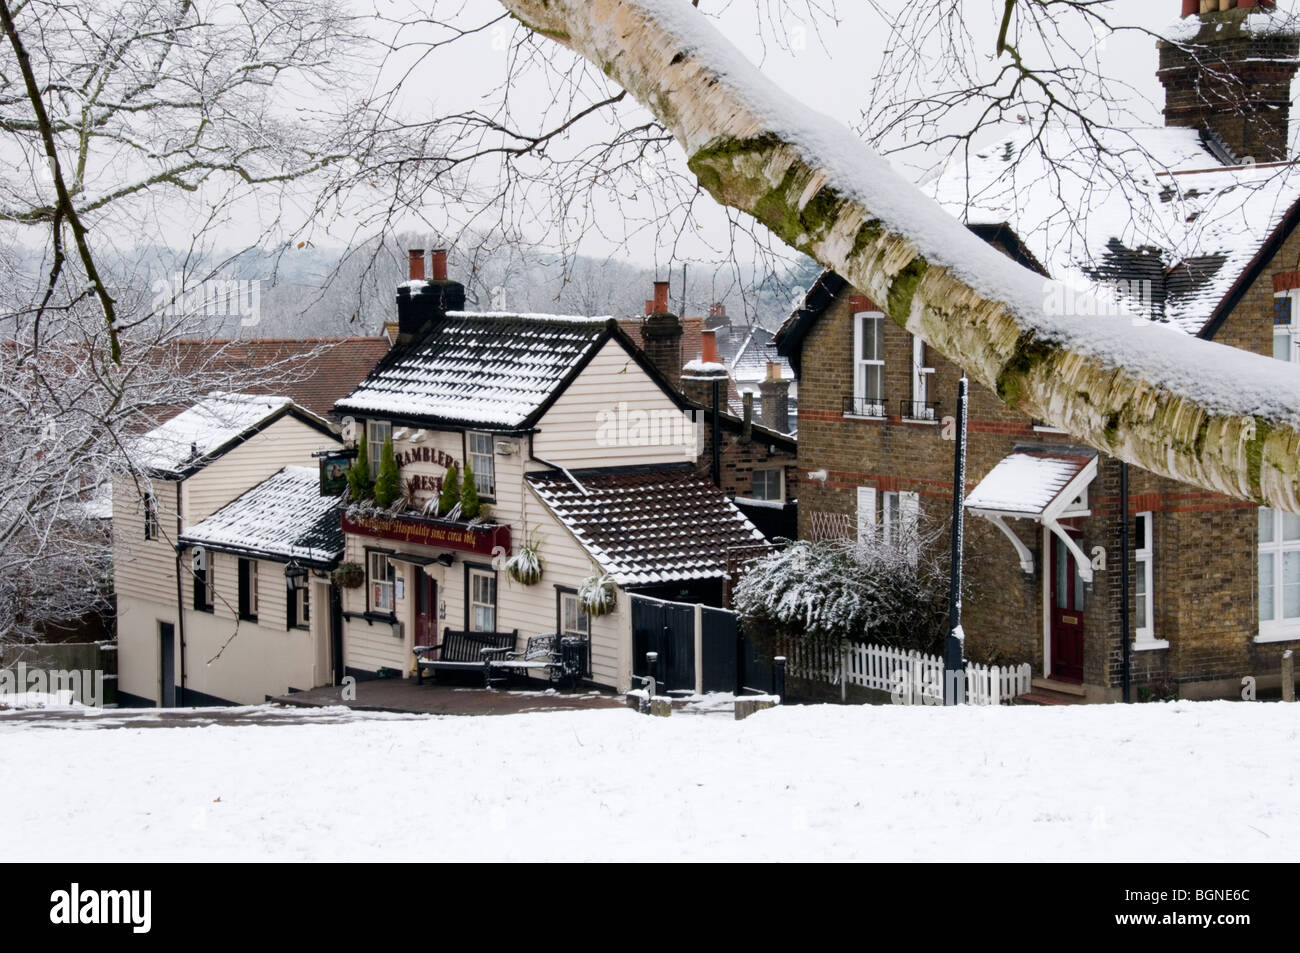 The Ramblers Rest pub in snow at Chislehurst, Kent, England Stock Photo